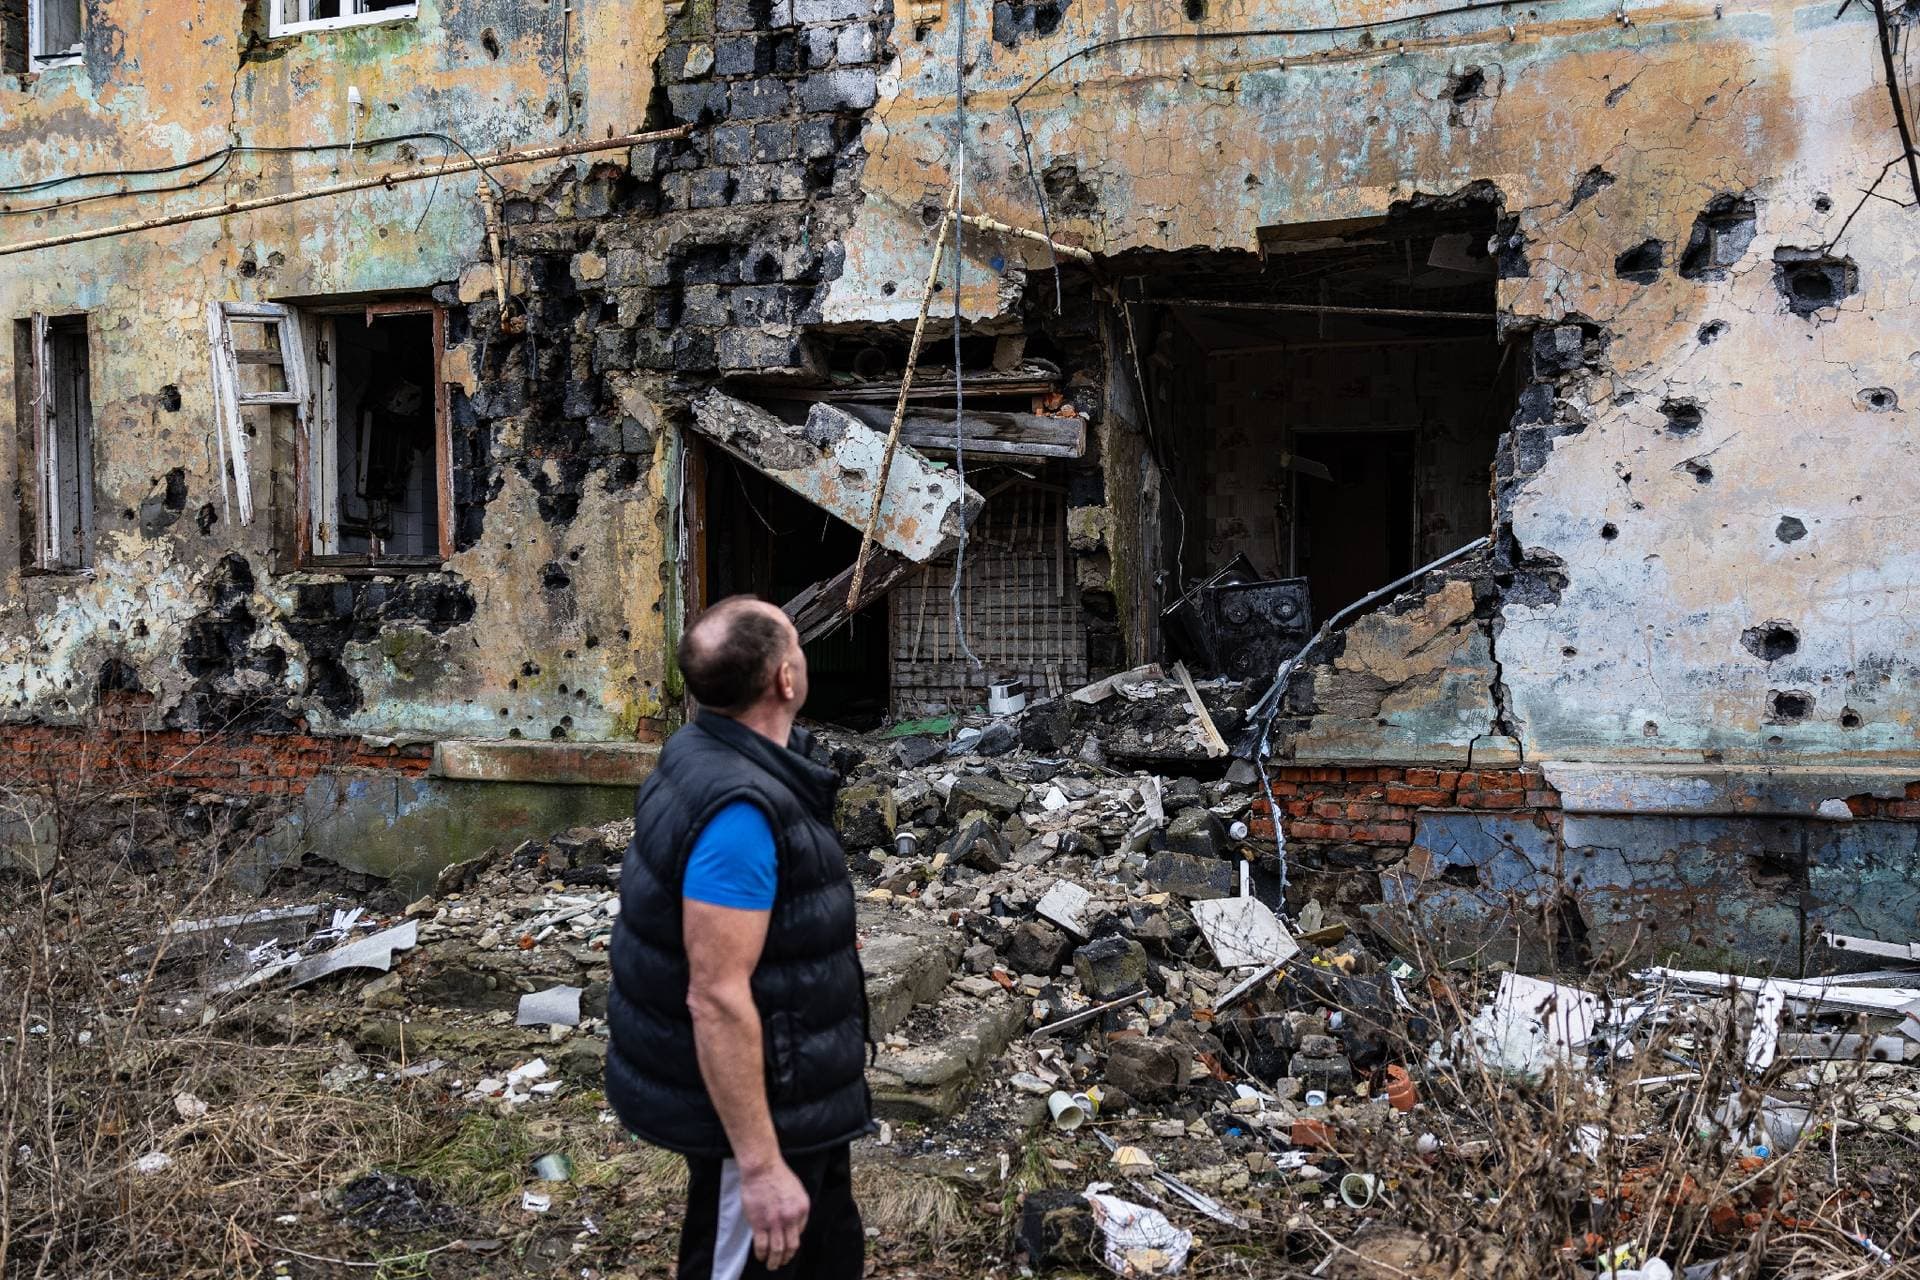 Andriy Pleshan views the destruction near his cellar in Izyum